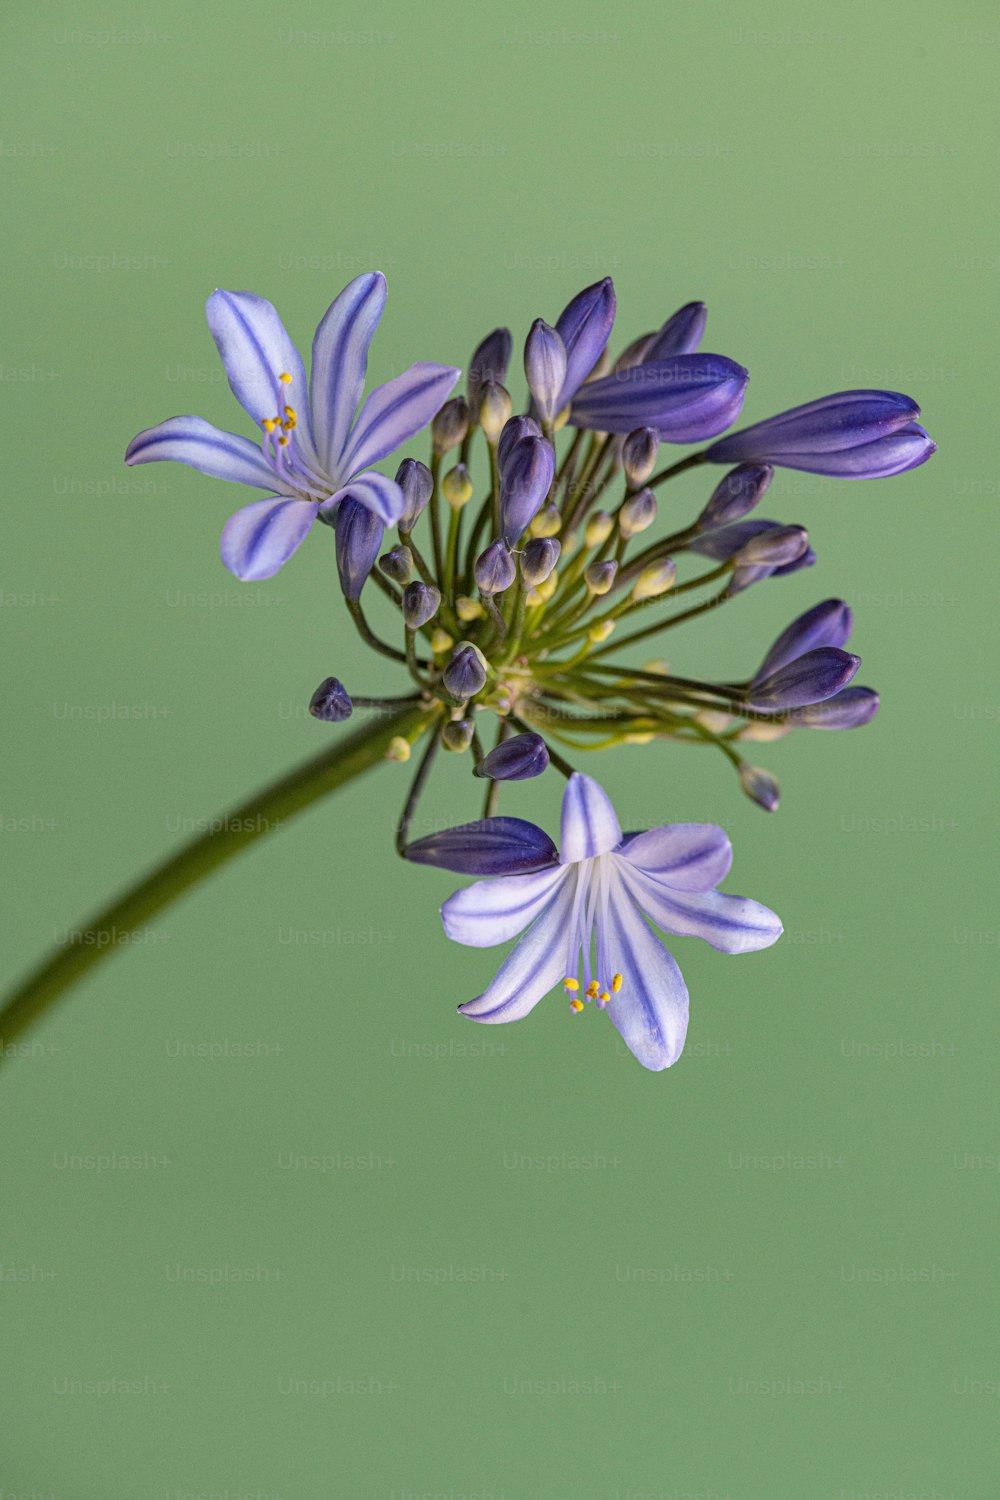 Flower Light Pictures  Download Free Images on Unsplash